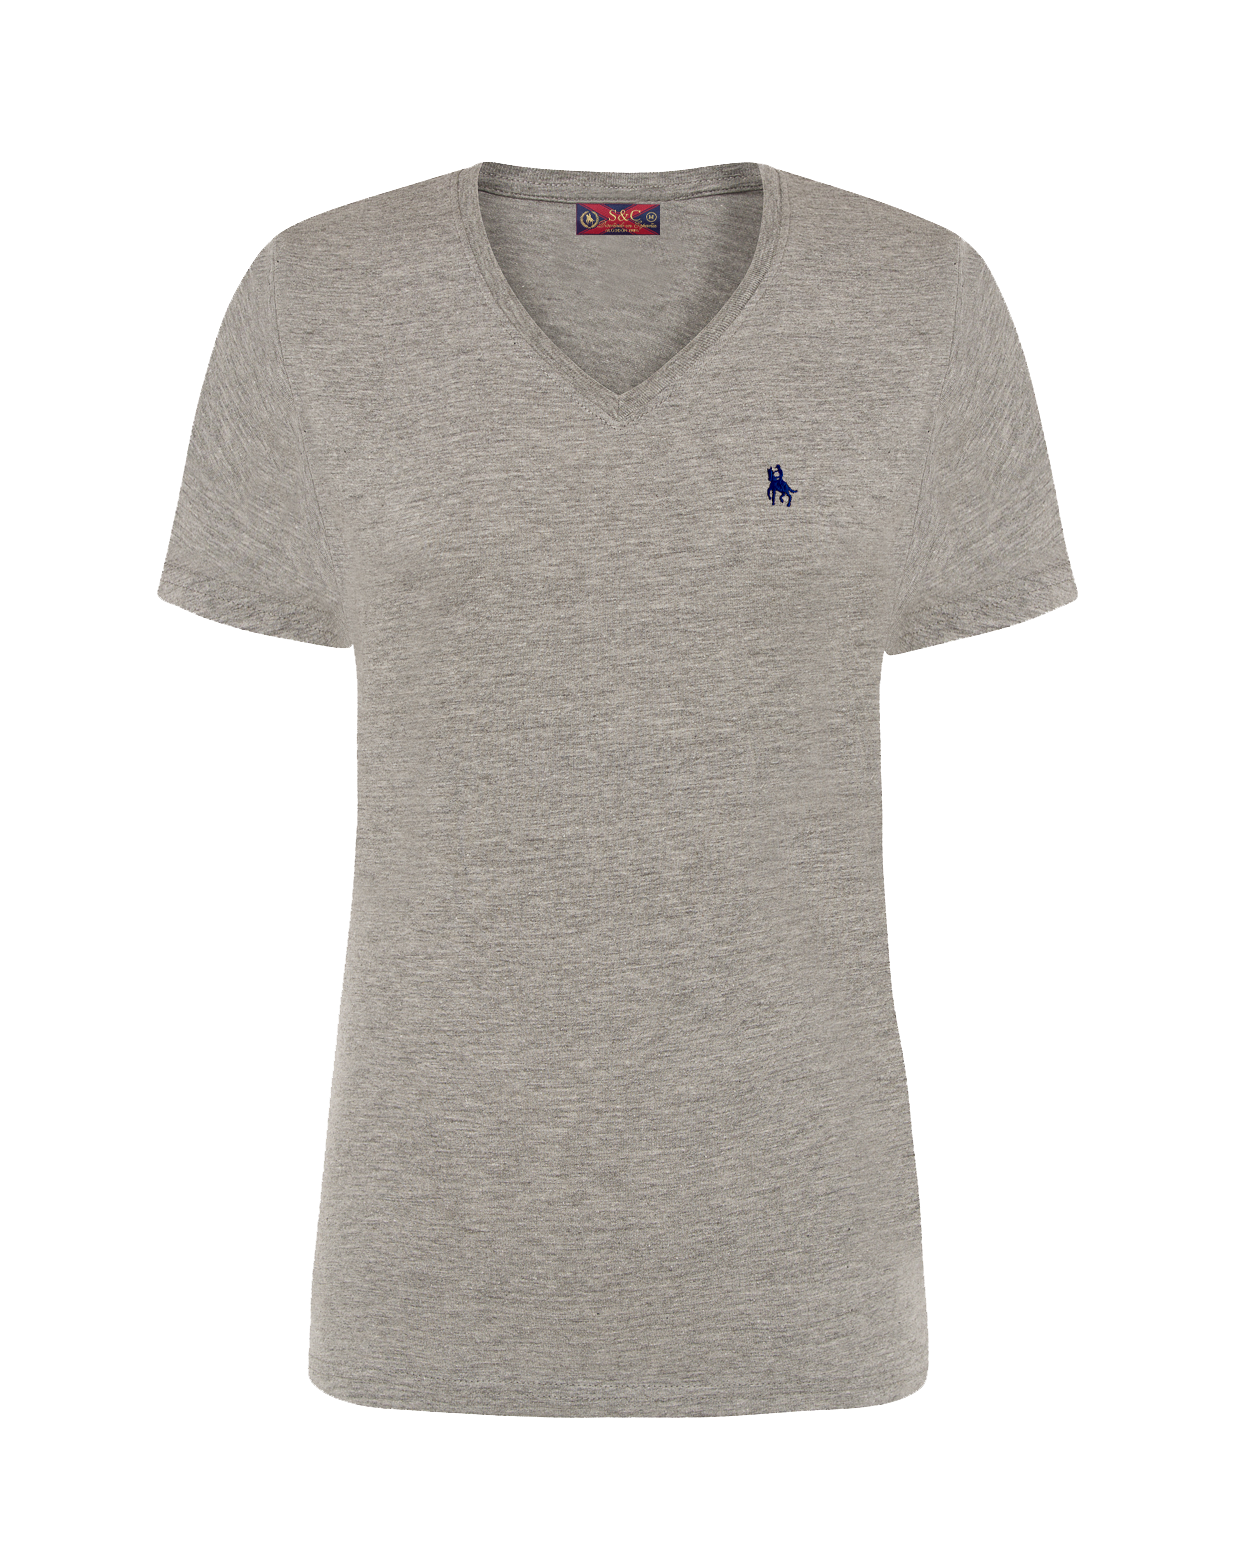 Camiseta pico manga corta gris